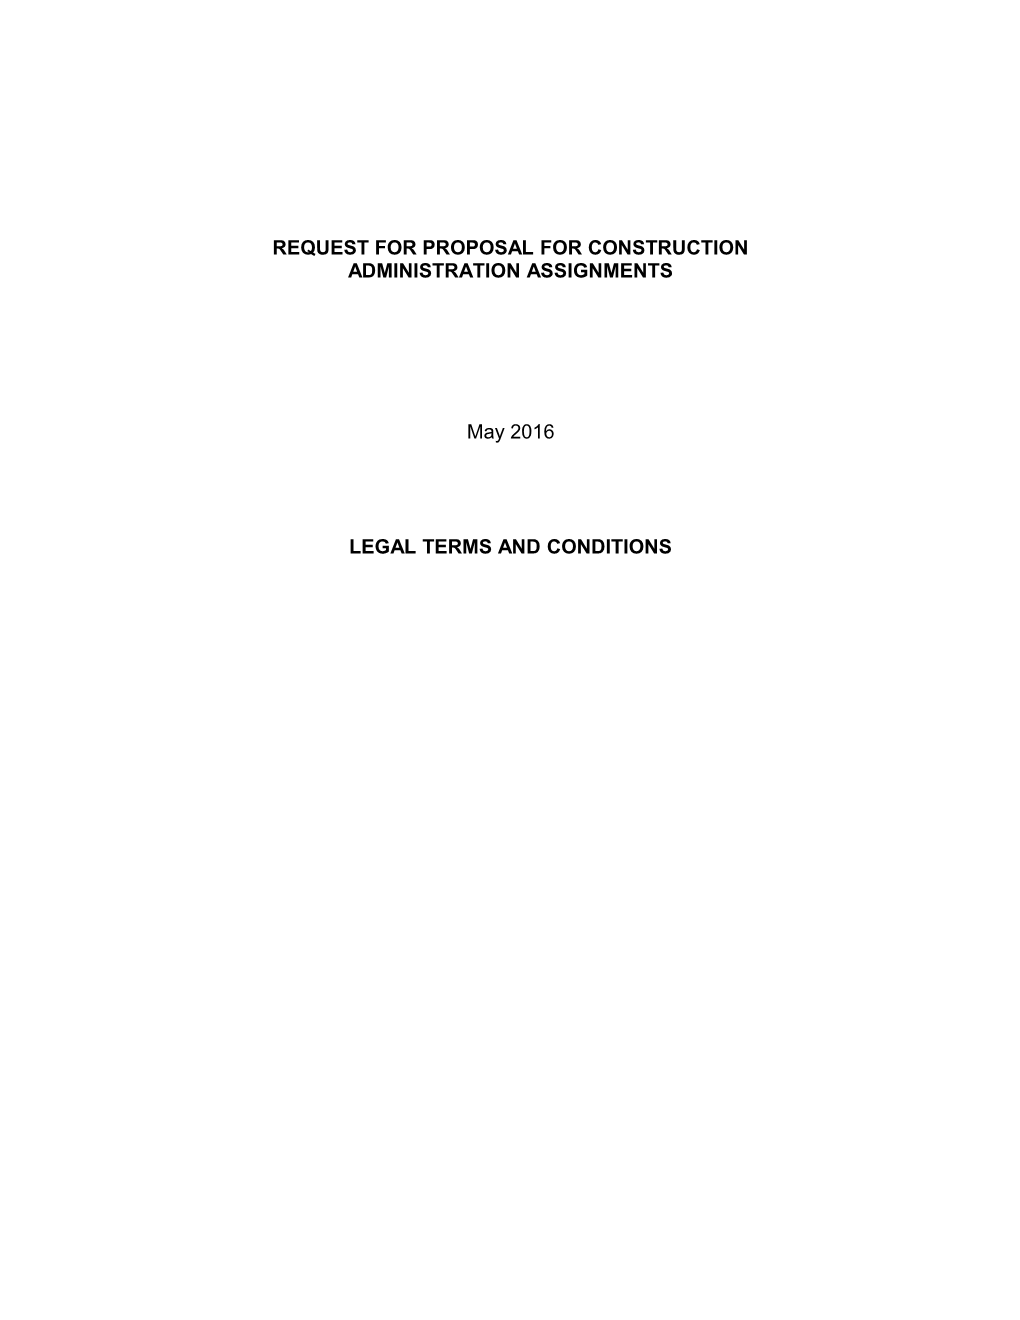 CA RFQ Part B - Working Document